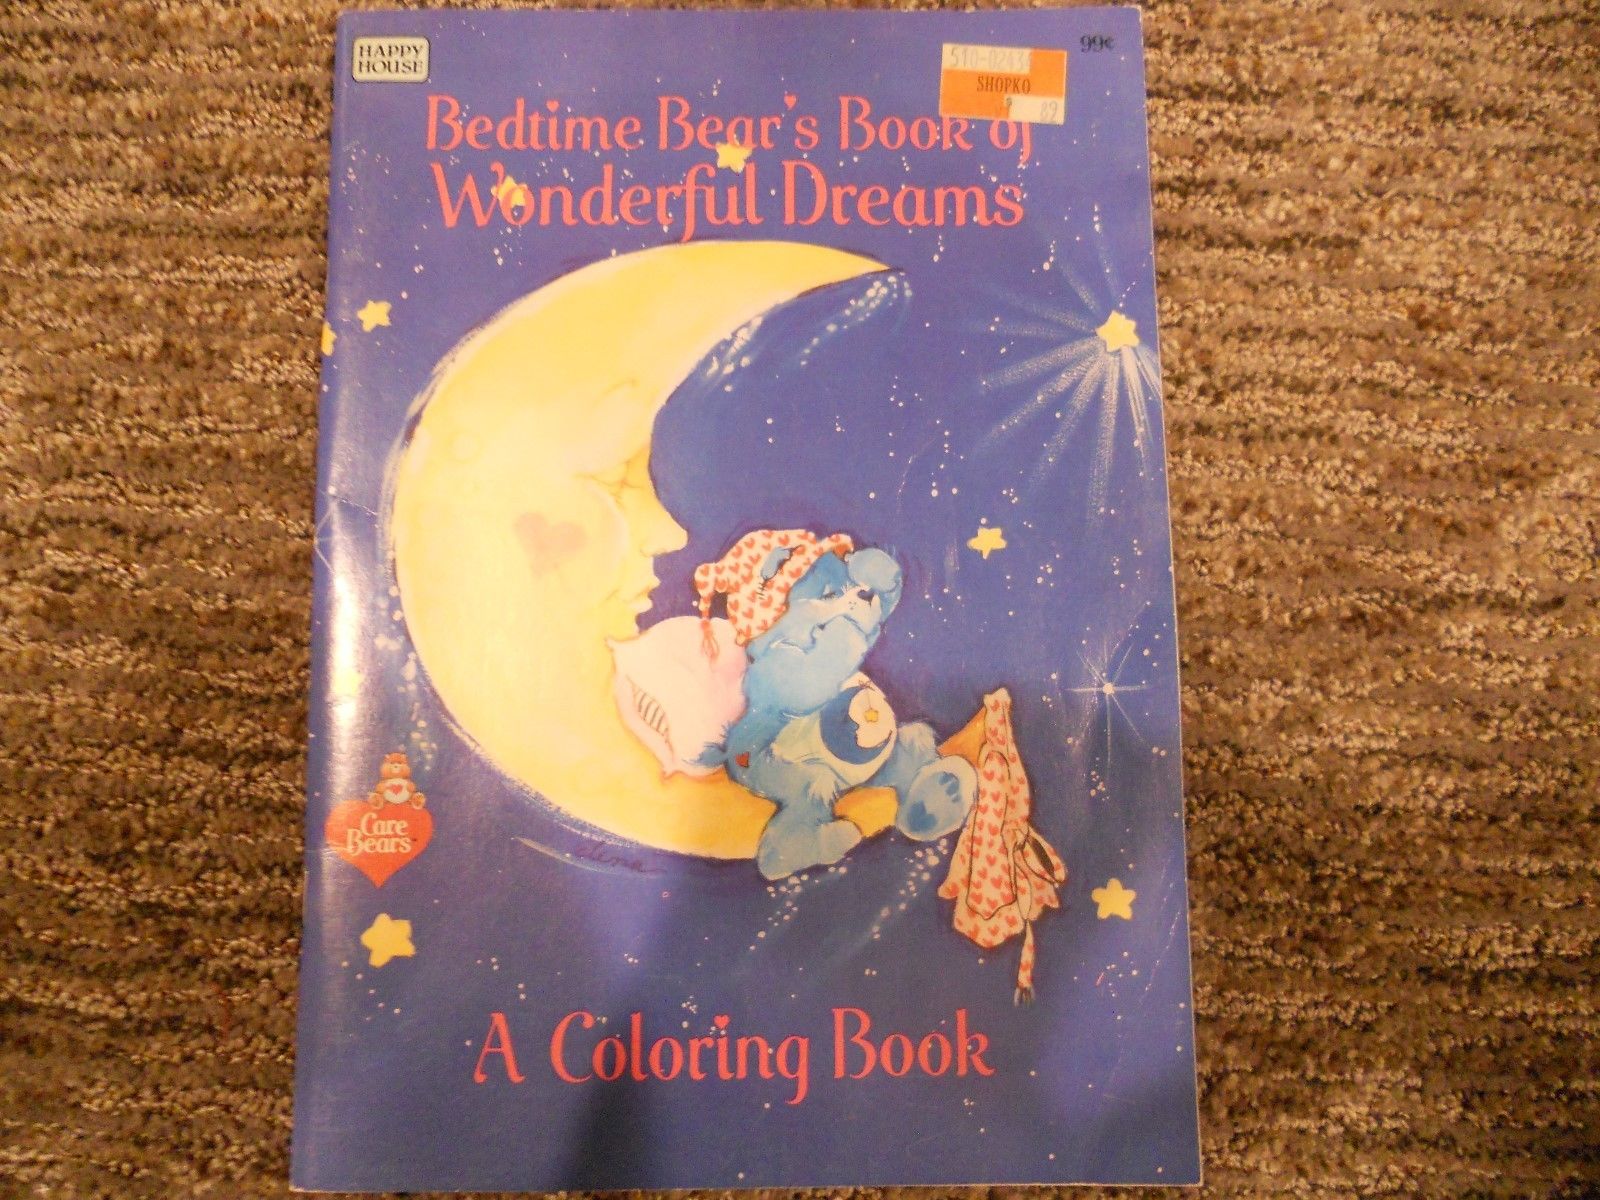 Vintage 1983 Care Bears Coloring Book Bedtime Bear's Book of Wonderful Dreams 